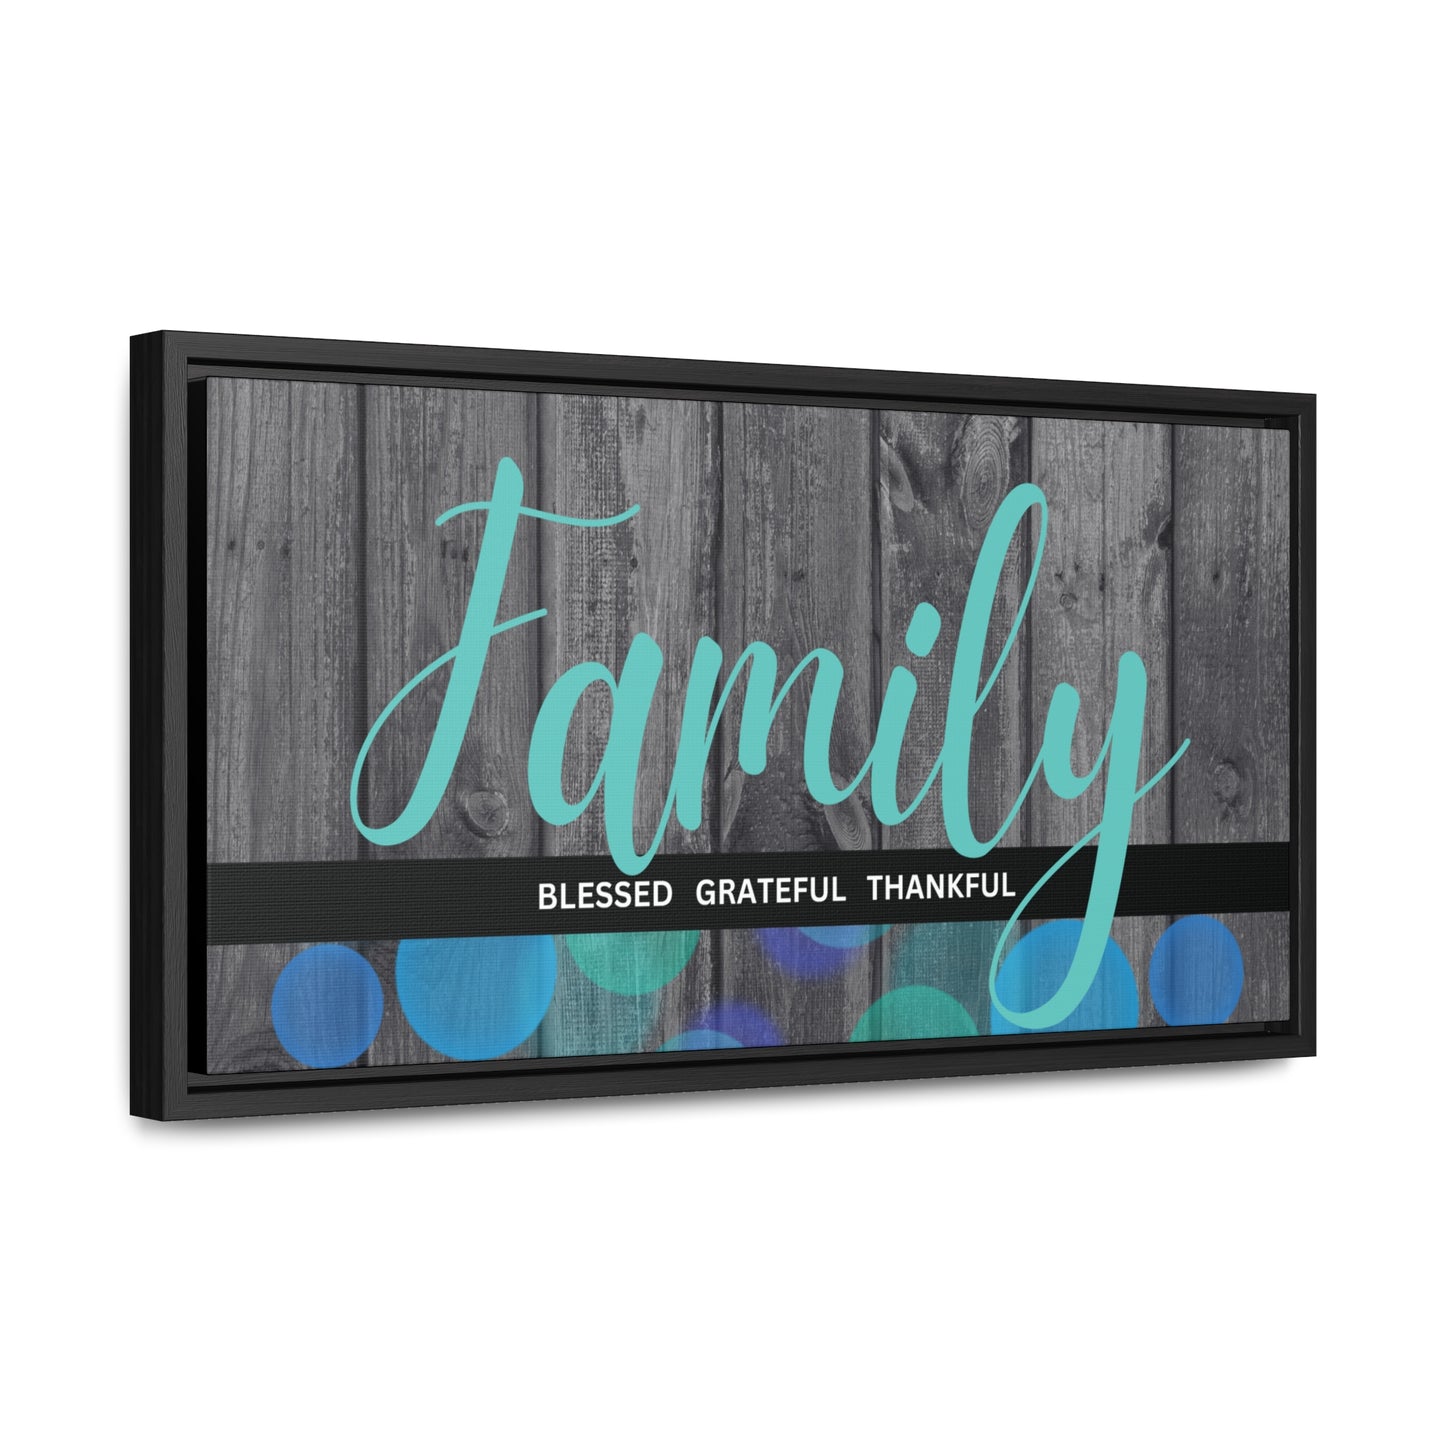 Christian Wall Art: Family, Blessed, Grateful, Thankful (Floating Frame)